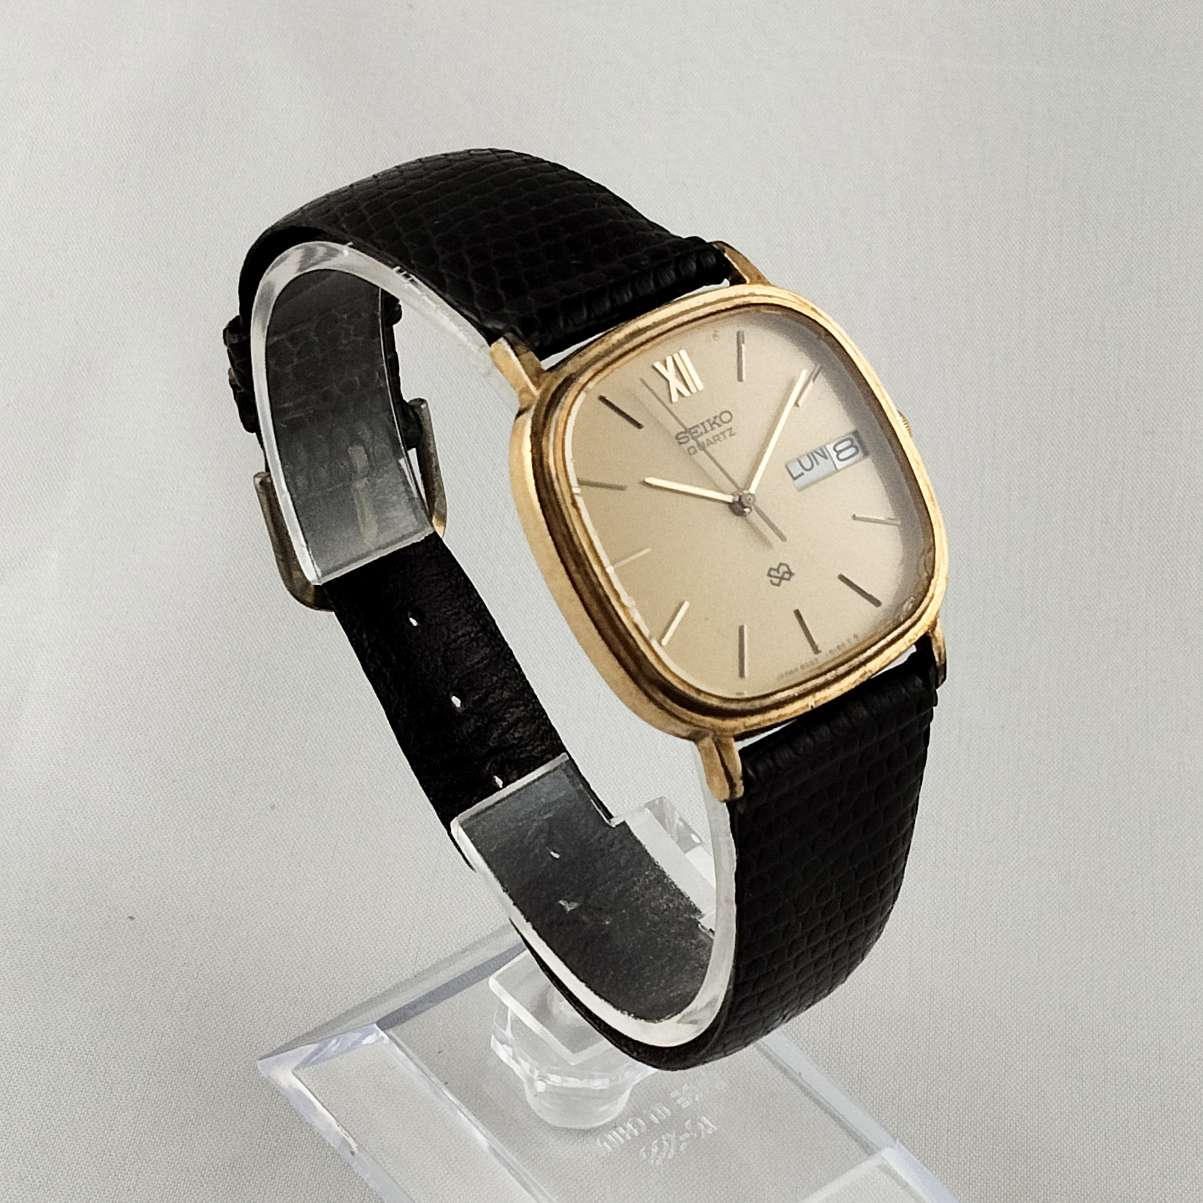 Seiko Unisex Watch, Gold Tone Details, Brown Textured Leather Strap